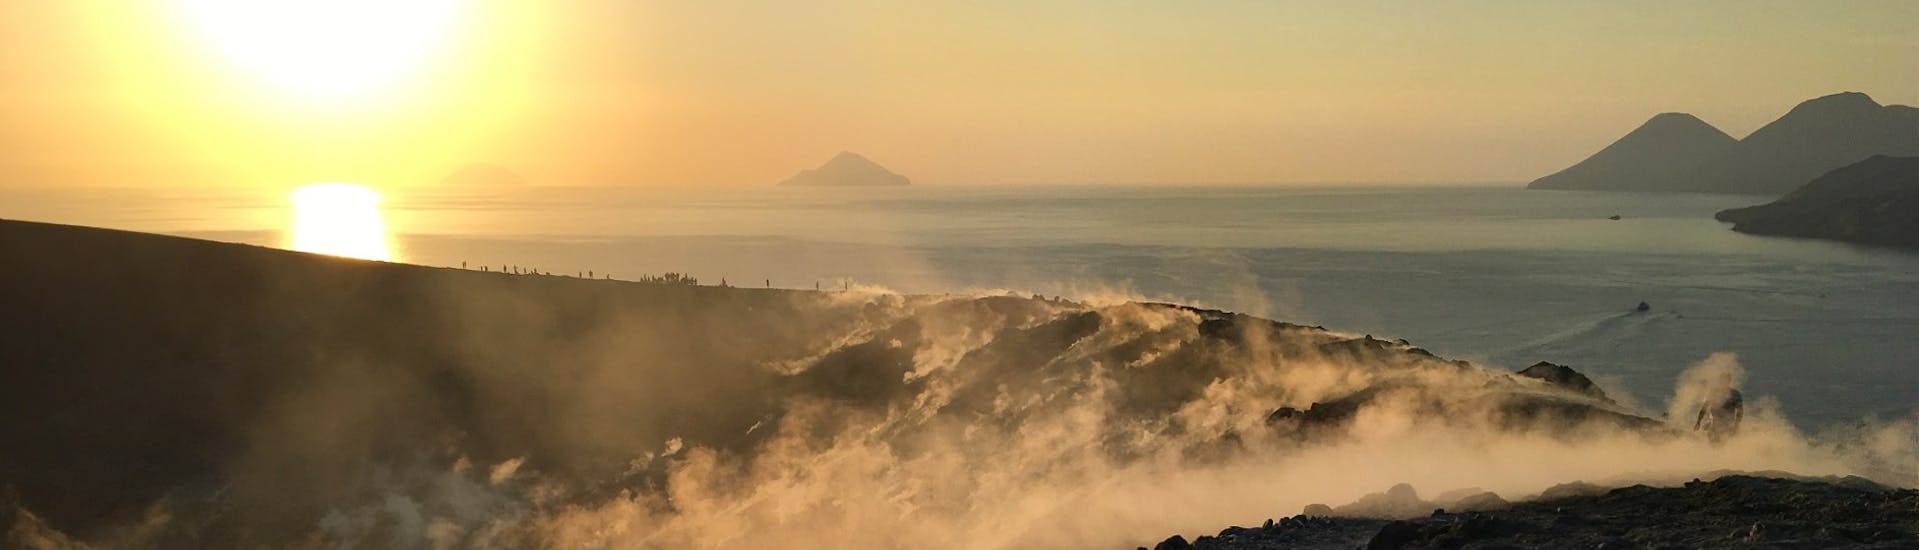 Panorama depuis le sommet de l'île de Vulcano pendant la Balade en Bateau vers Vulcano depuis Lipari avec Clarissa Viaggi Isole Eolie.